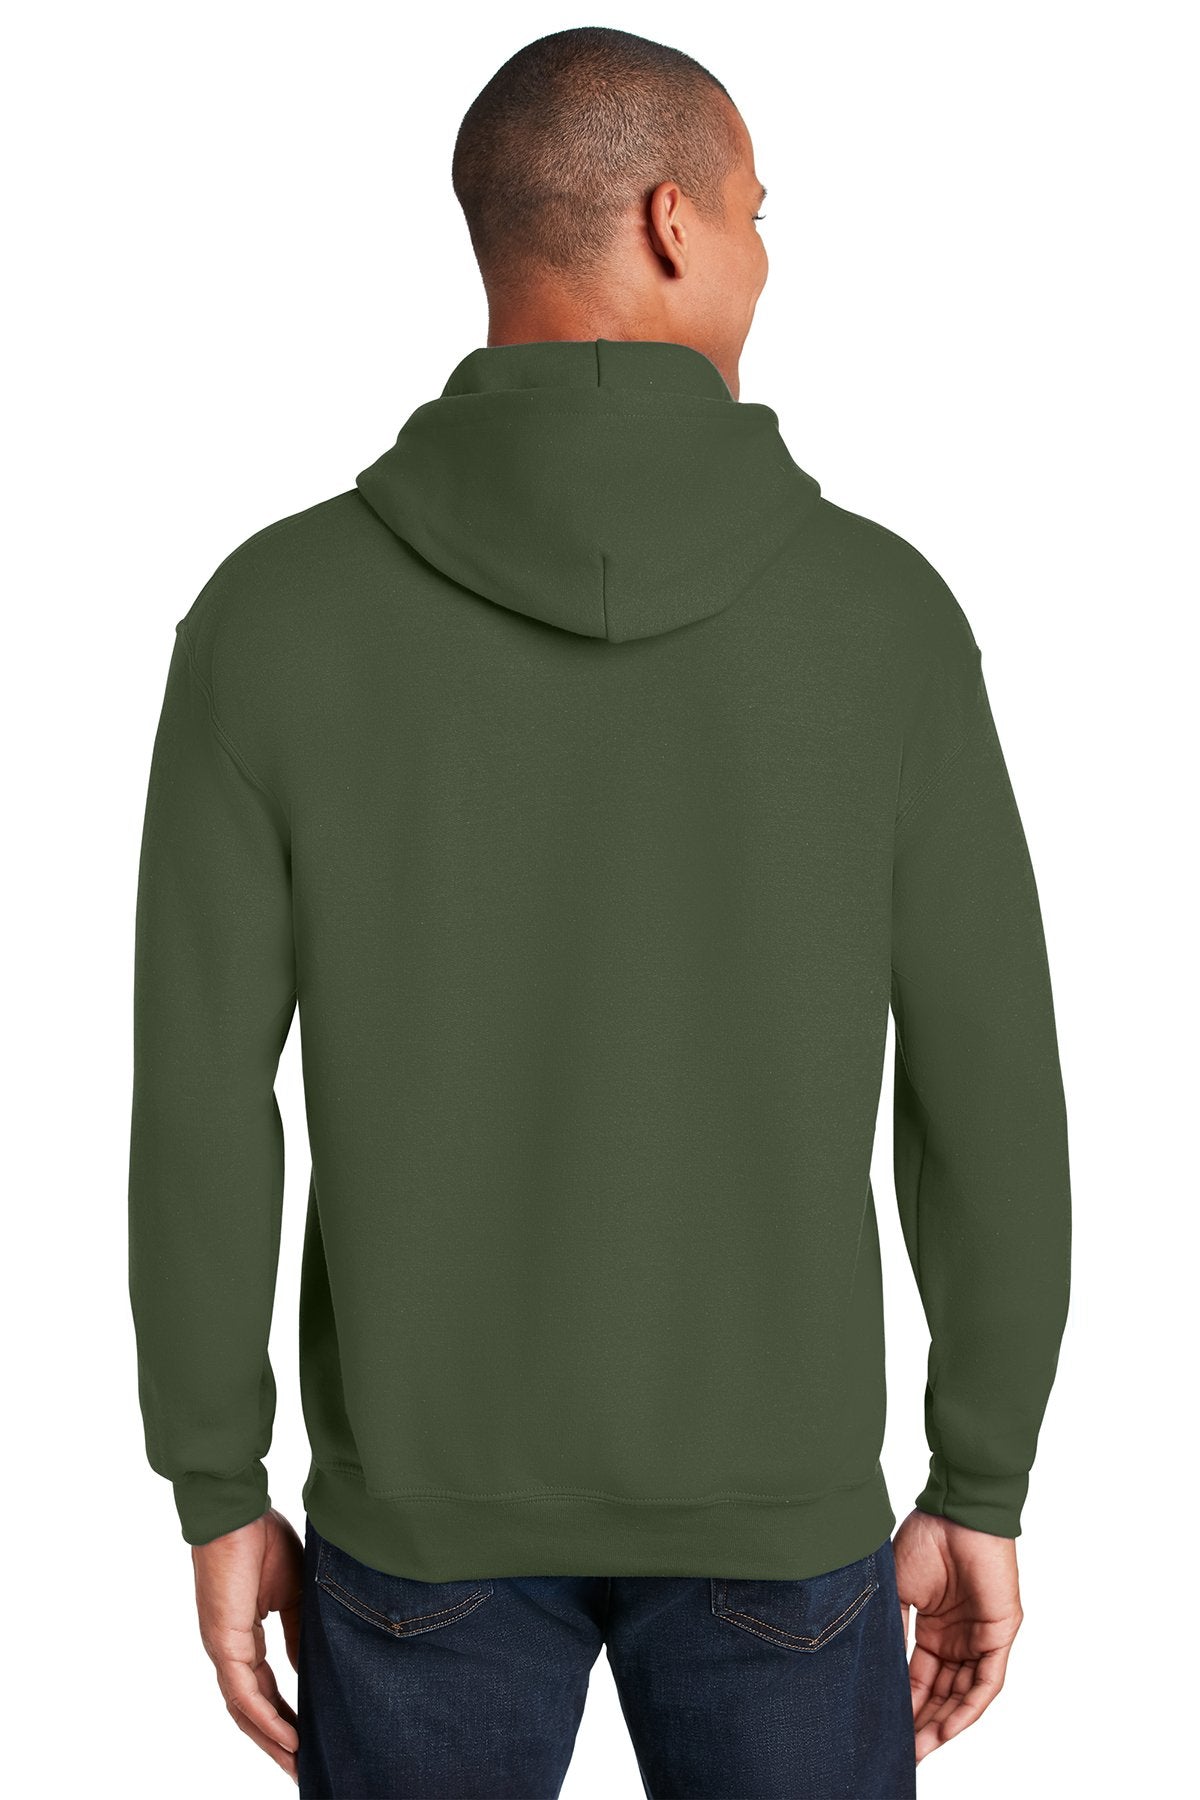 Gildan Heavy Blend Hooded Sweatshirt Military Green